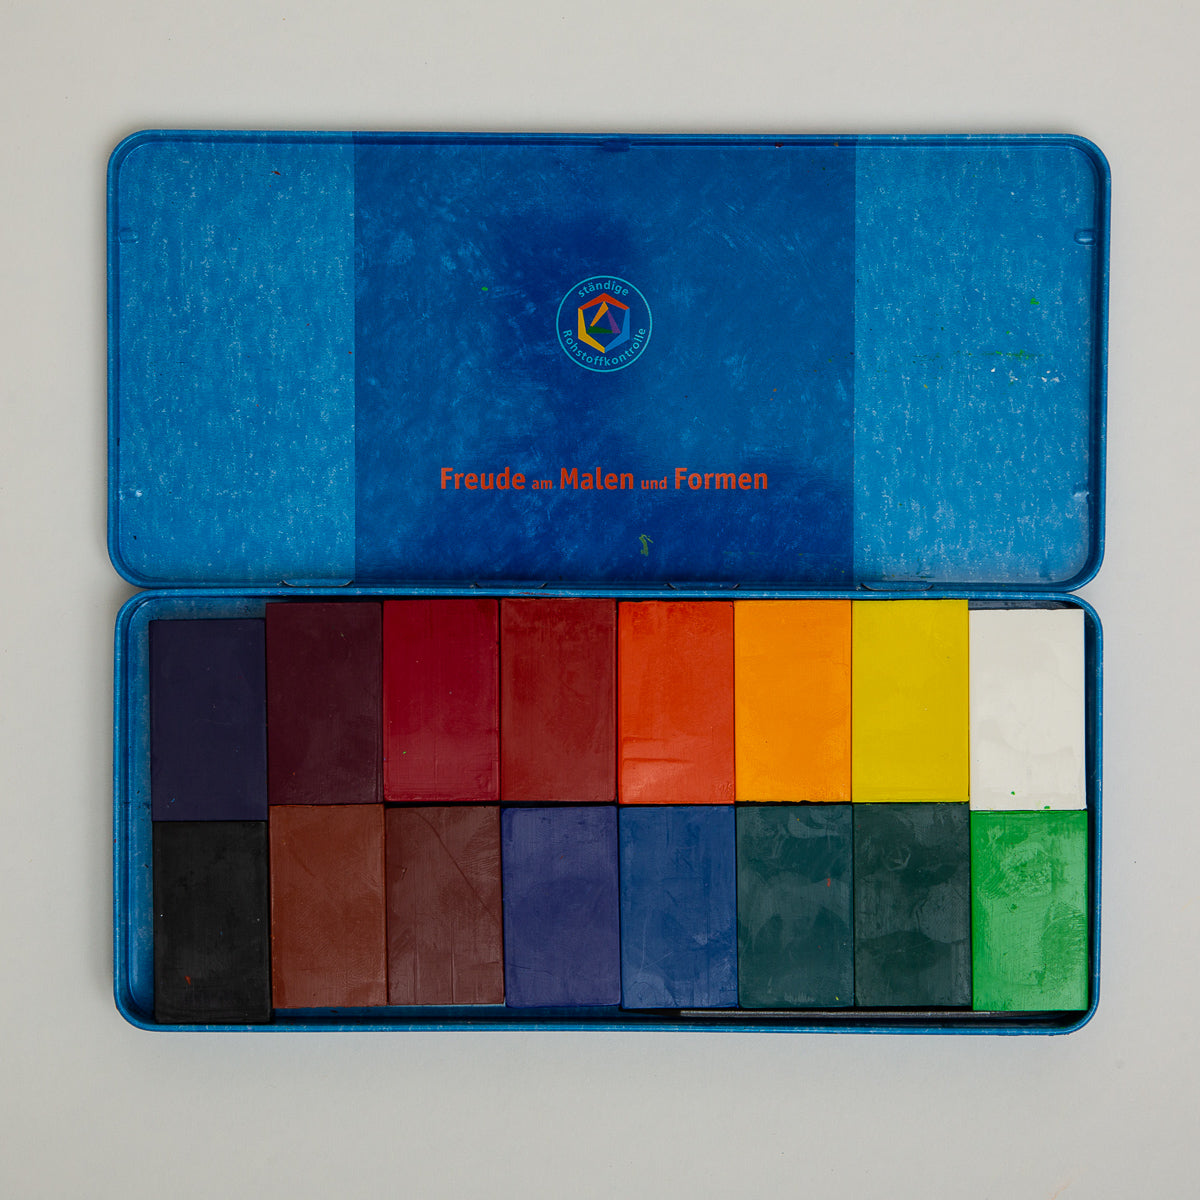 Stockmar Crayons – Treasures From Jennifer